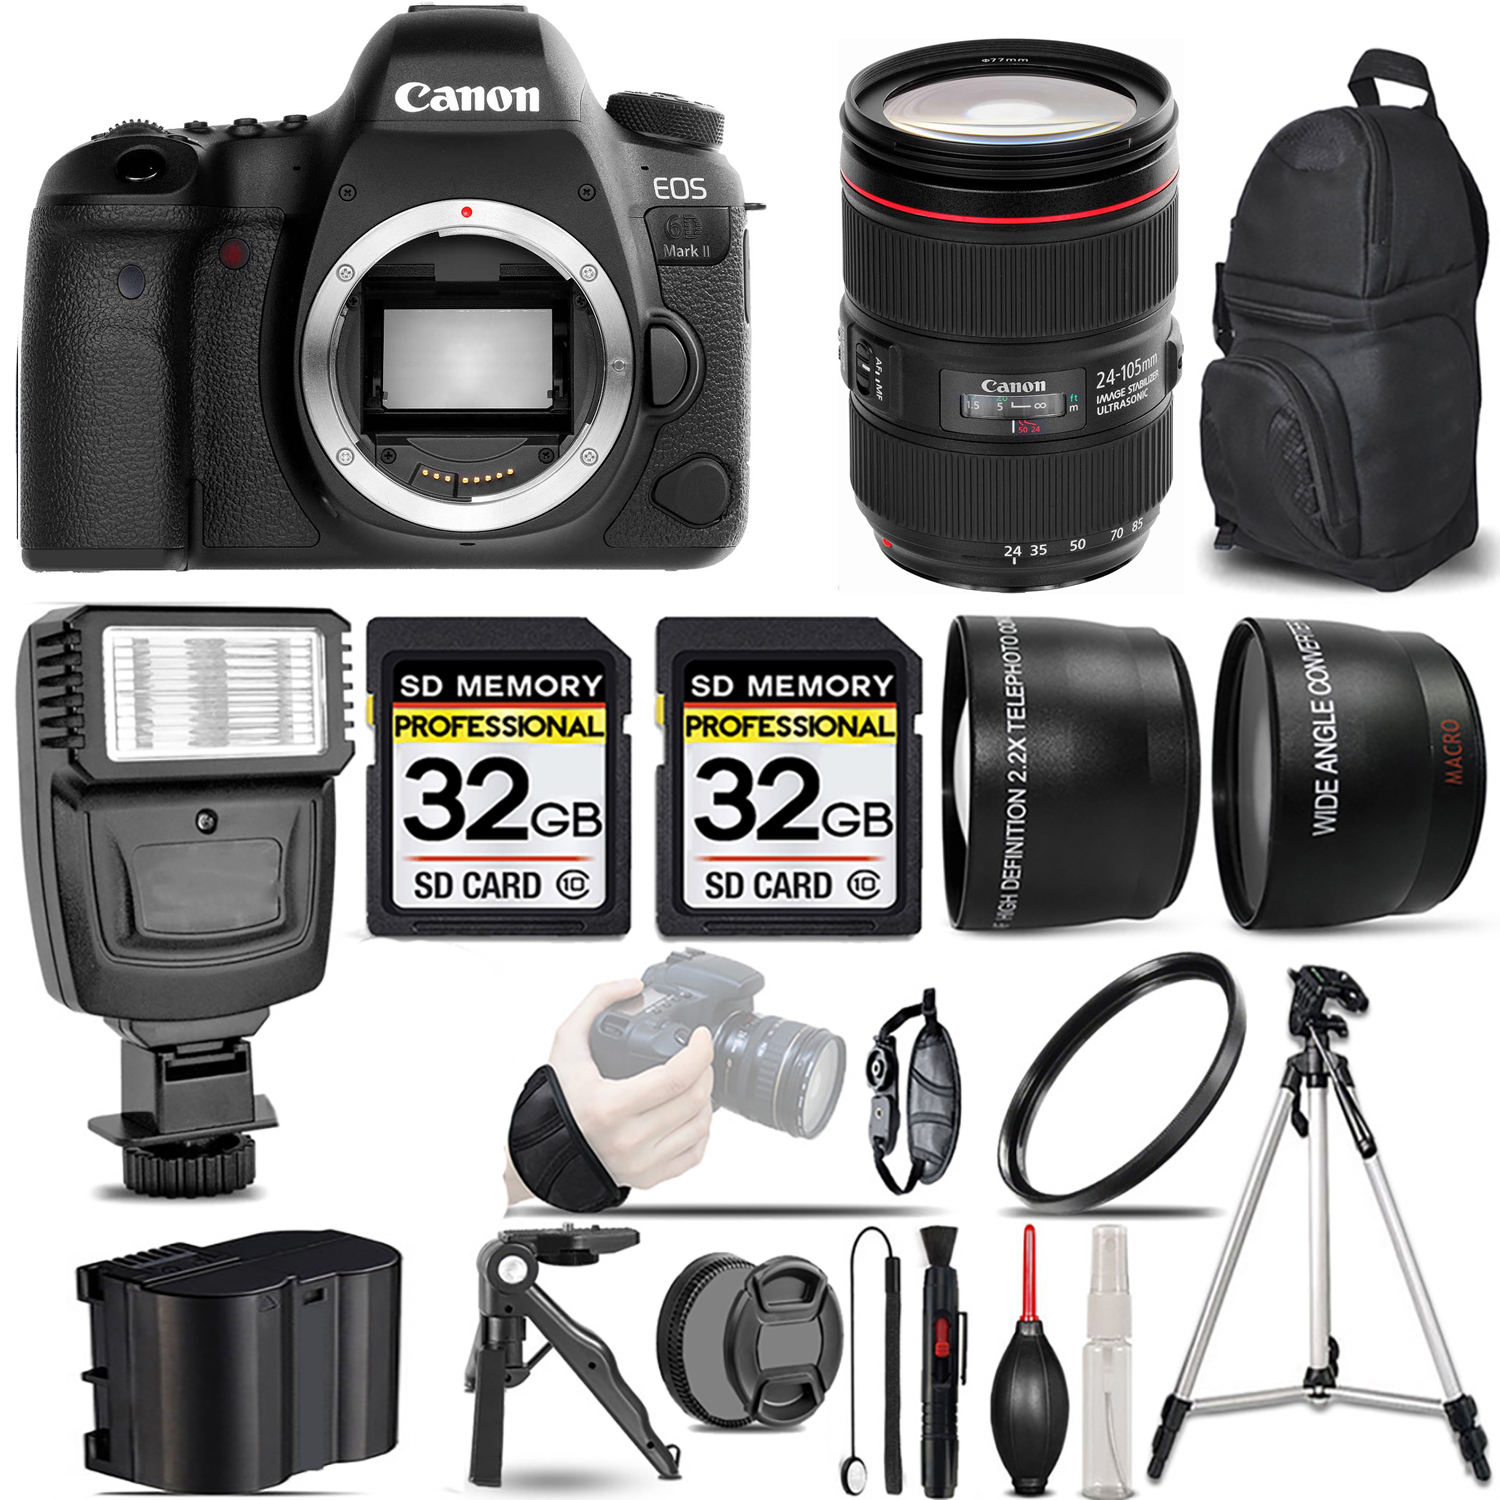 EOS 6D Mark II Camera + 24-105mm f/4L IS II USM Lens + Flash + 64GB - Kit *FREE SHIPPING*